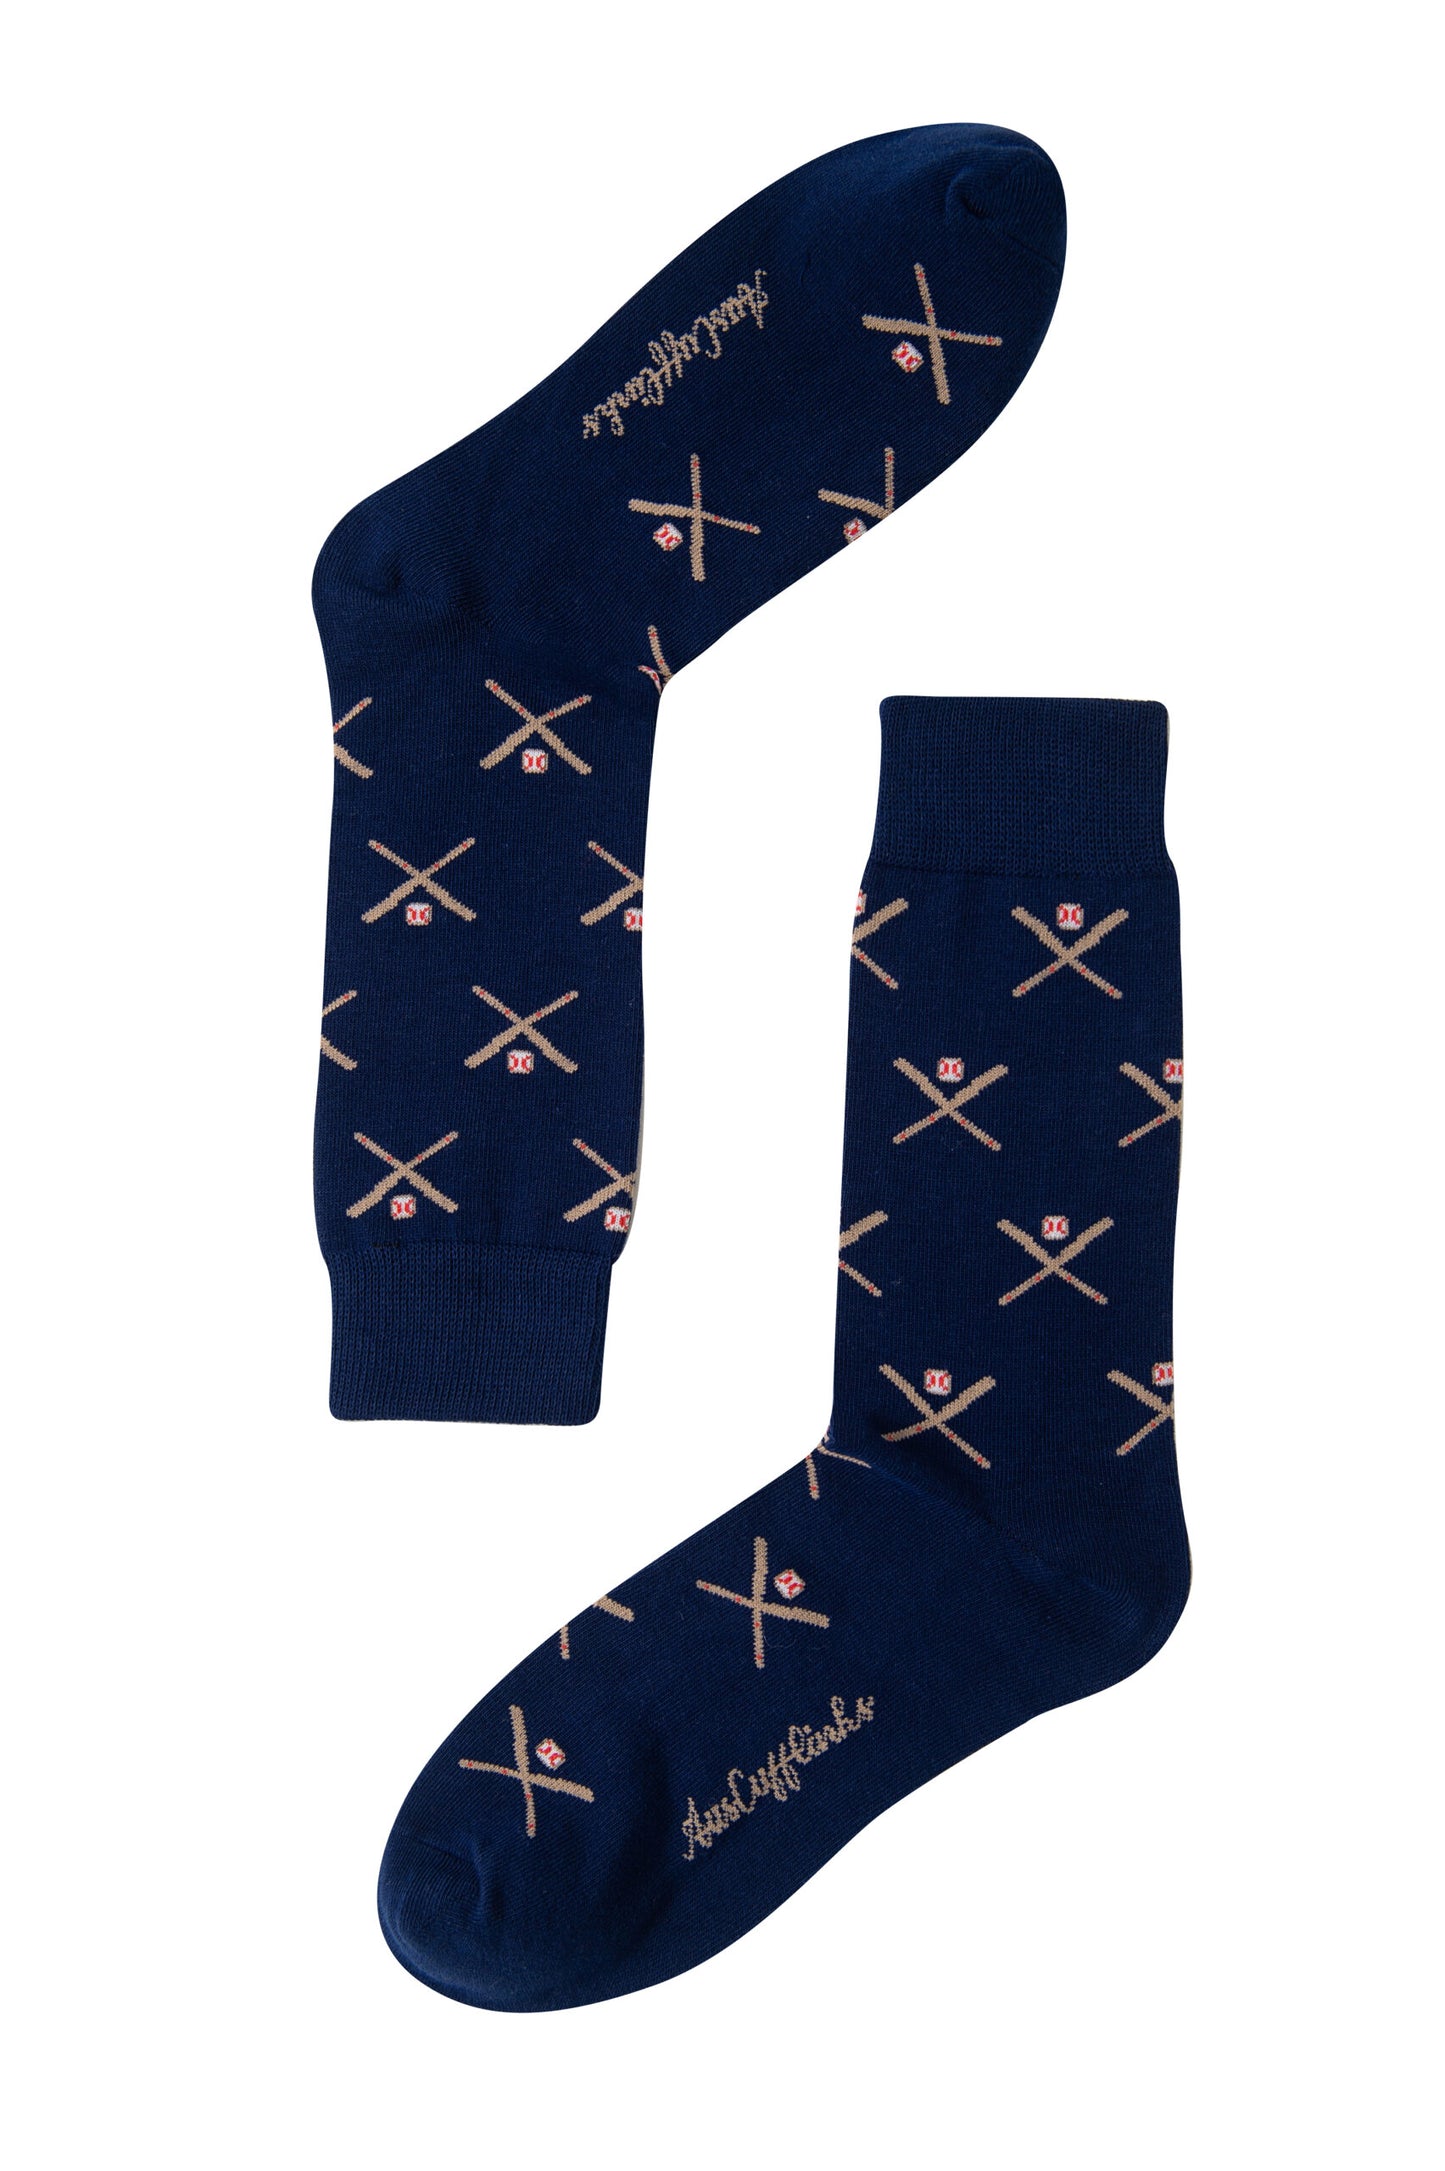 A pair of Crossed Baseball Socks with crossed sticks design.